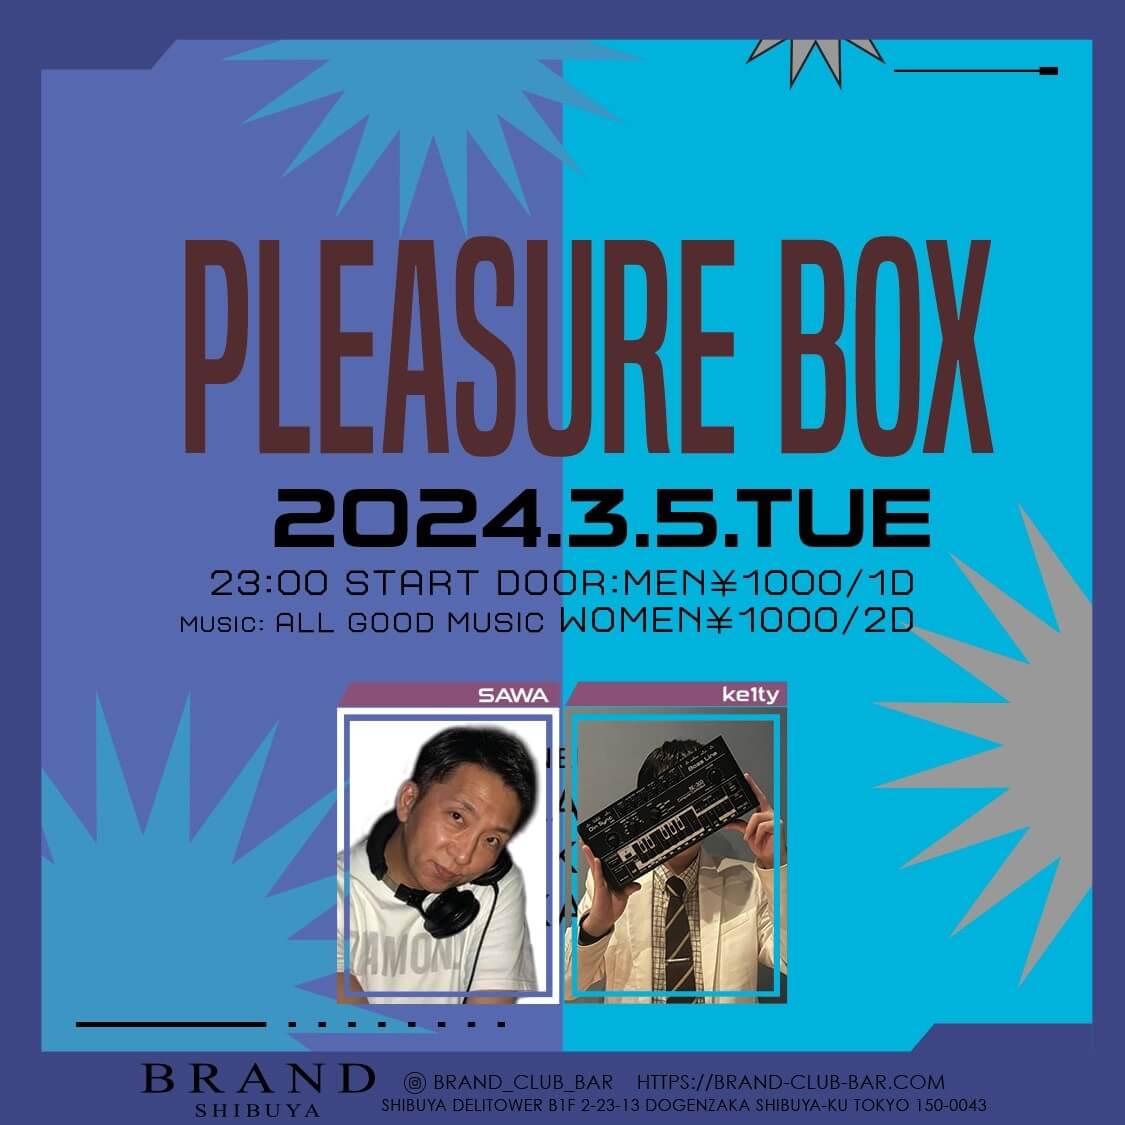 PLEASURE BOX 2024年03月05日（火曜日）に渋谷 クラブのBRAND SHIBUYAで開催されるALL MIXイベント